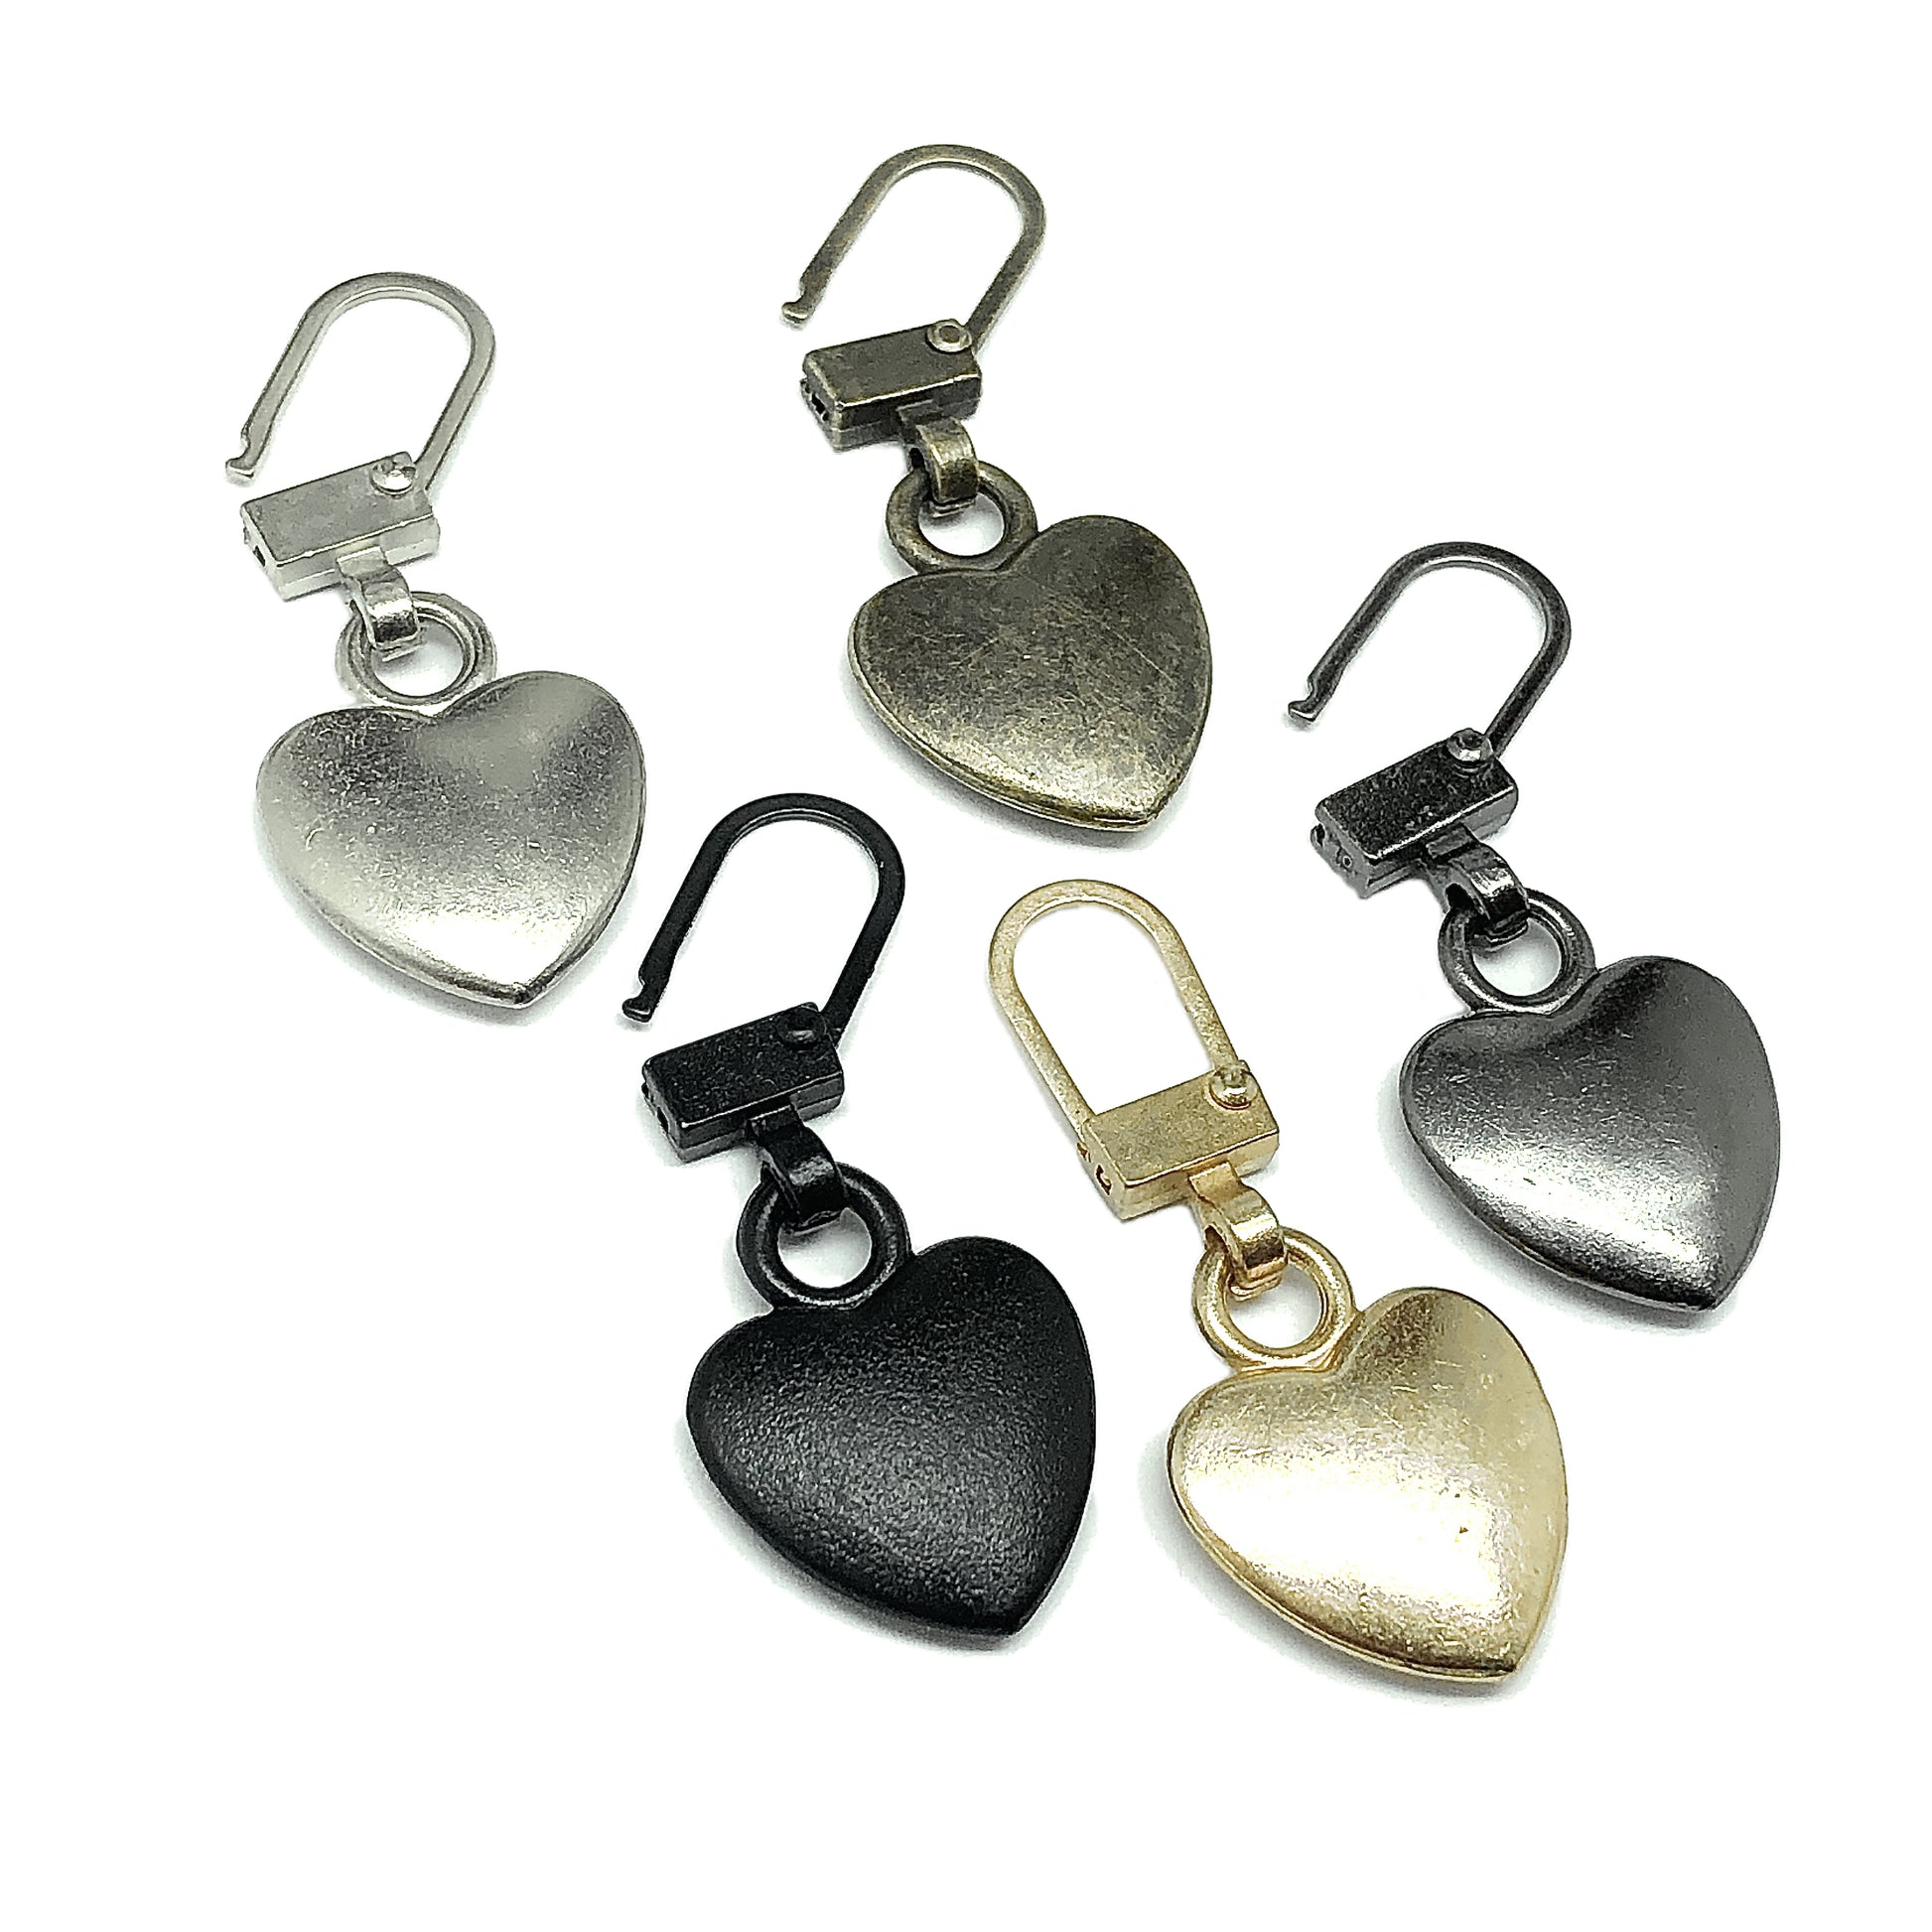 Zipper Pull Repair Charm - Rustic Graphite Heart Zipper Charm for Repair / Decorative anything it can clip onto! Purse Charm, Tote bag Charm, cosmetic bag charm & More